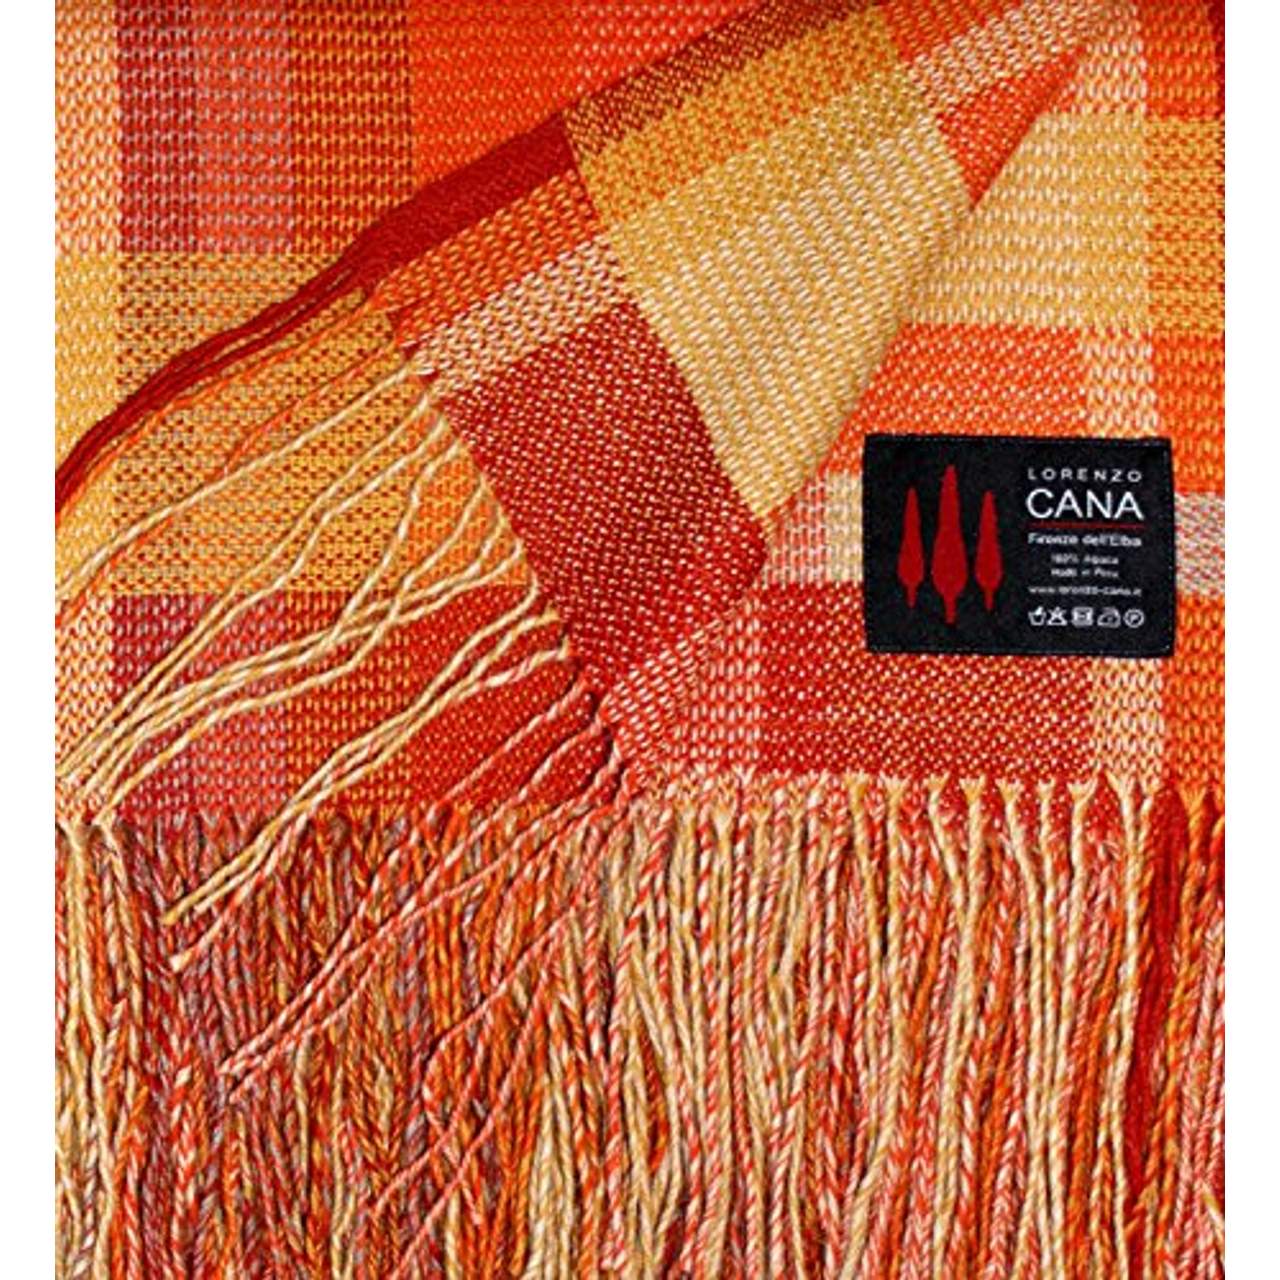 Lorenzo Cana Premium Alpakadecke 100% Alpaka Fair Trade Decke Wohndecke